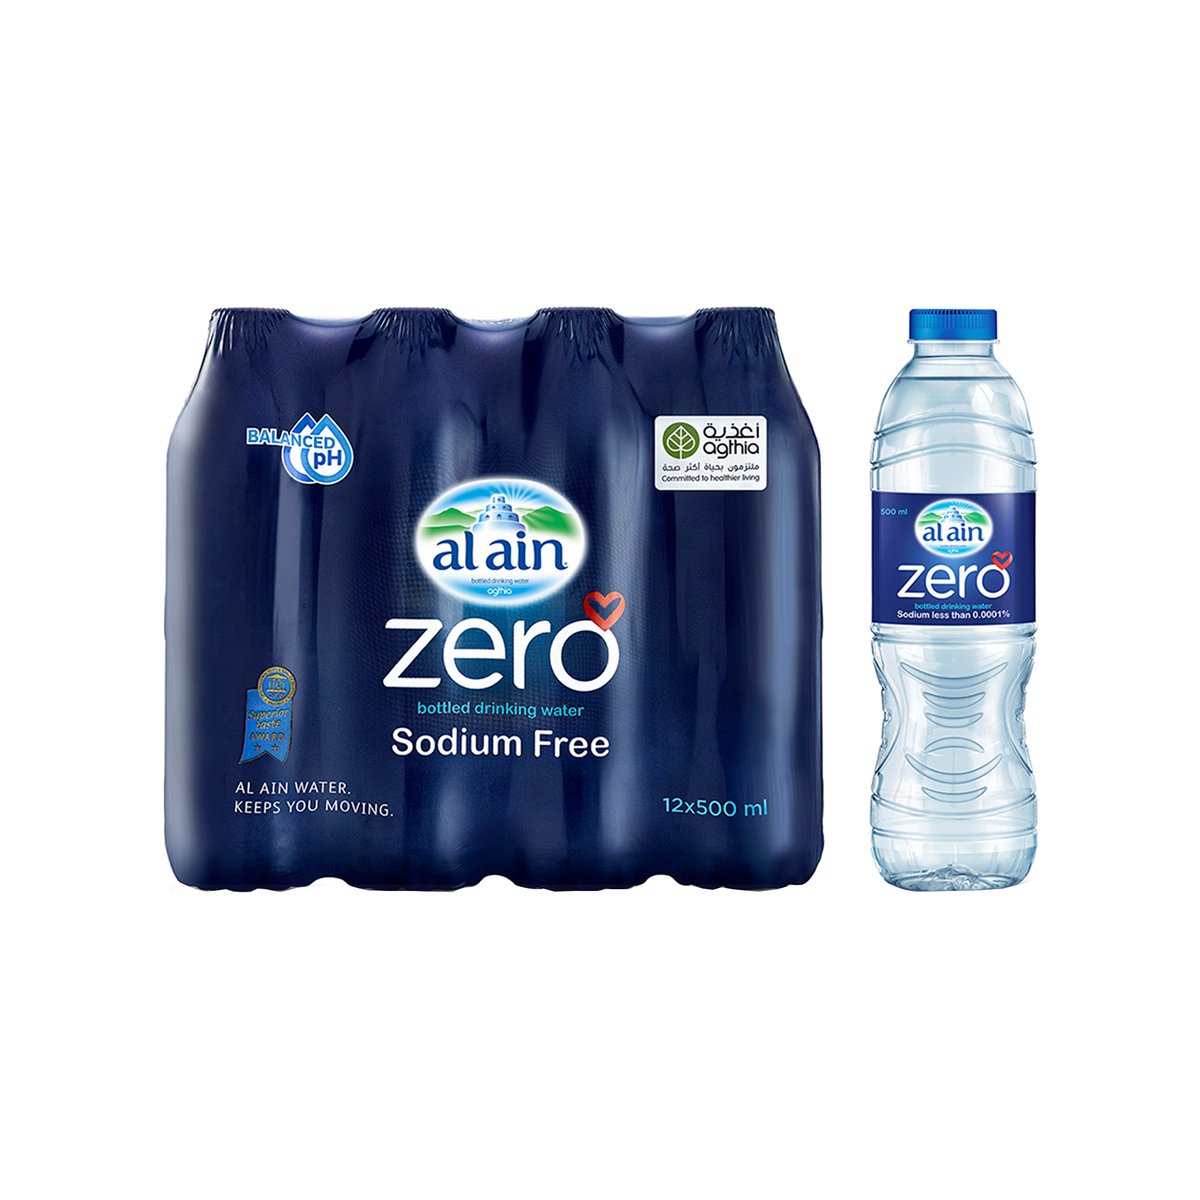 Al Ain Zero Bottled Drinking Water Sodium Free 12 x 500 ml